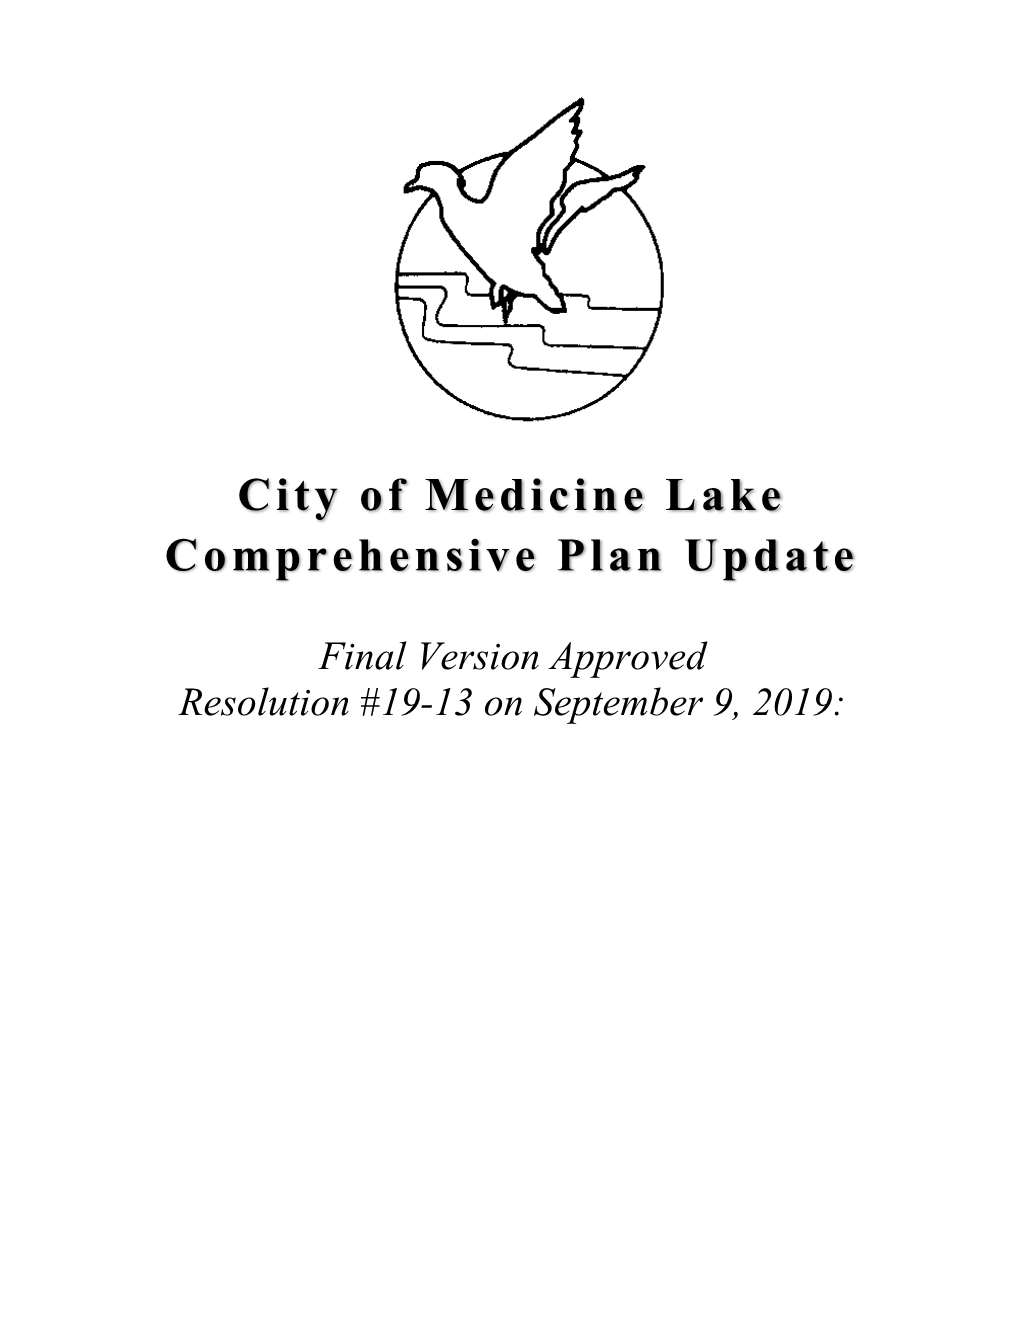 City of Medicine Lake Comprehensive Plan Update